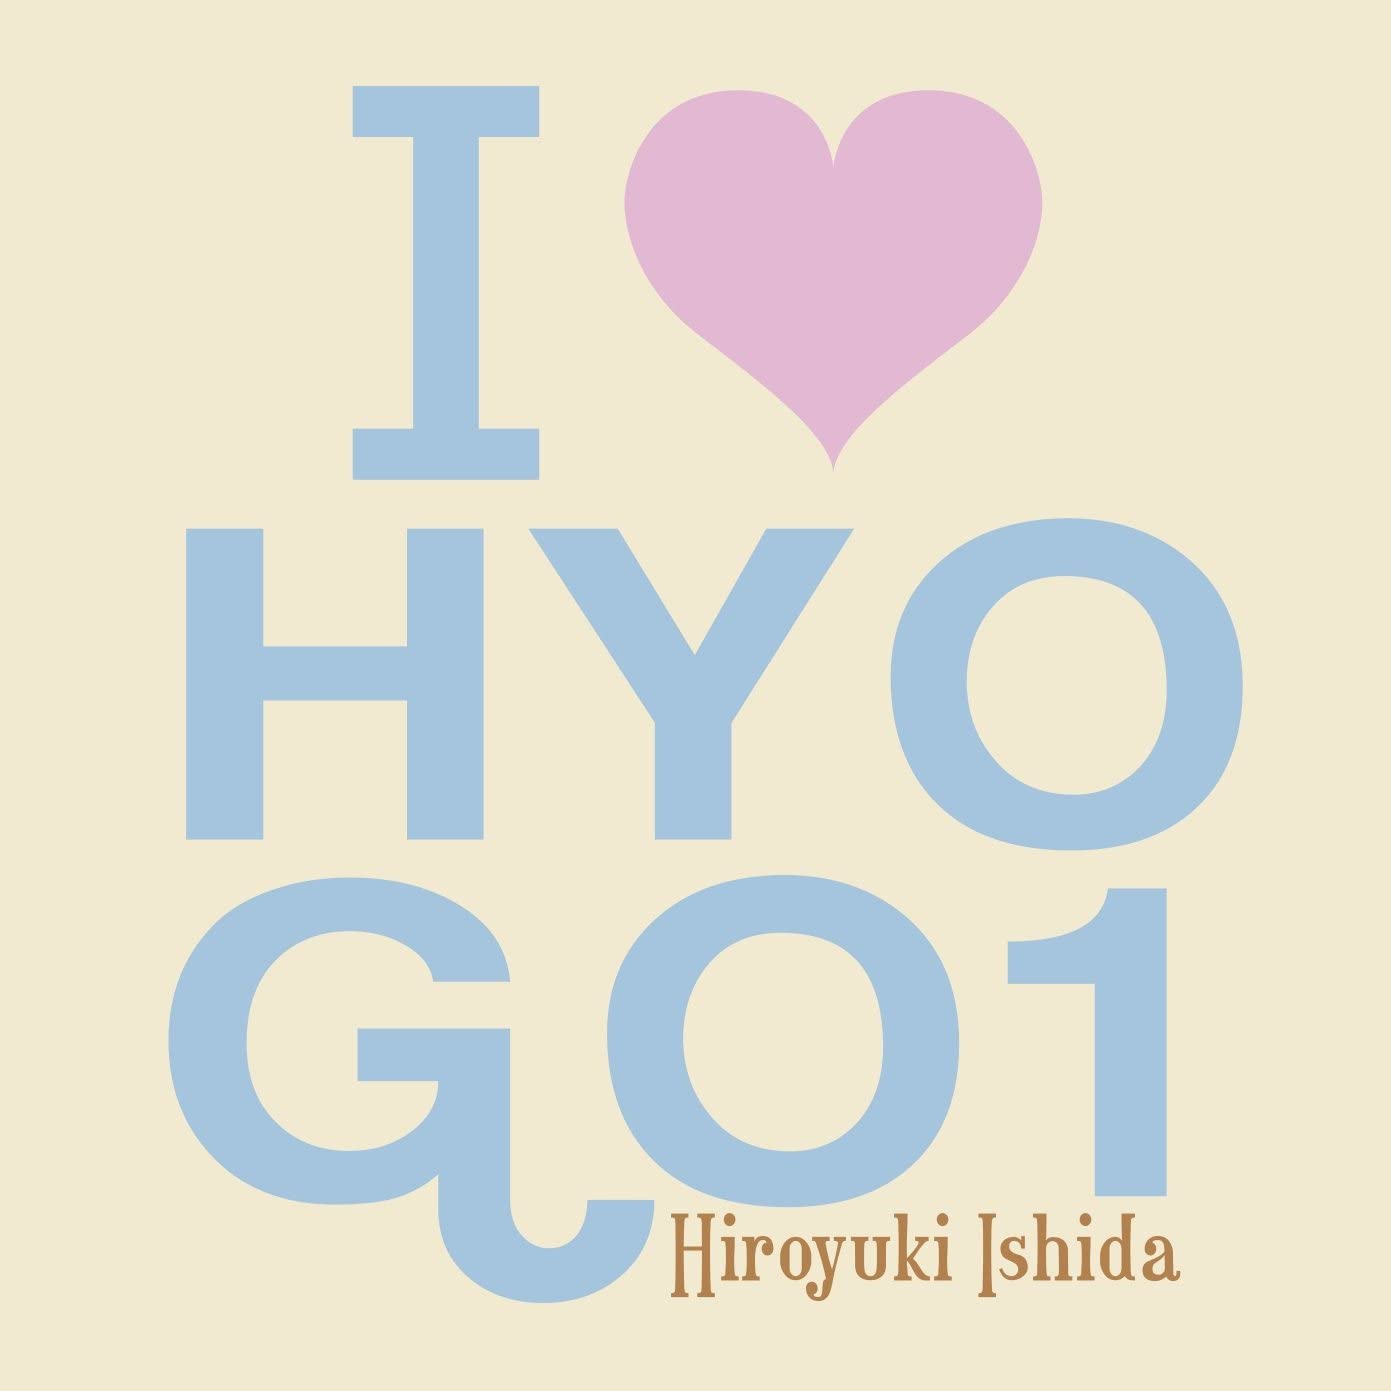 I LOVE HYOGO1